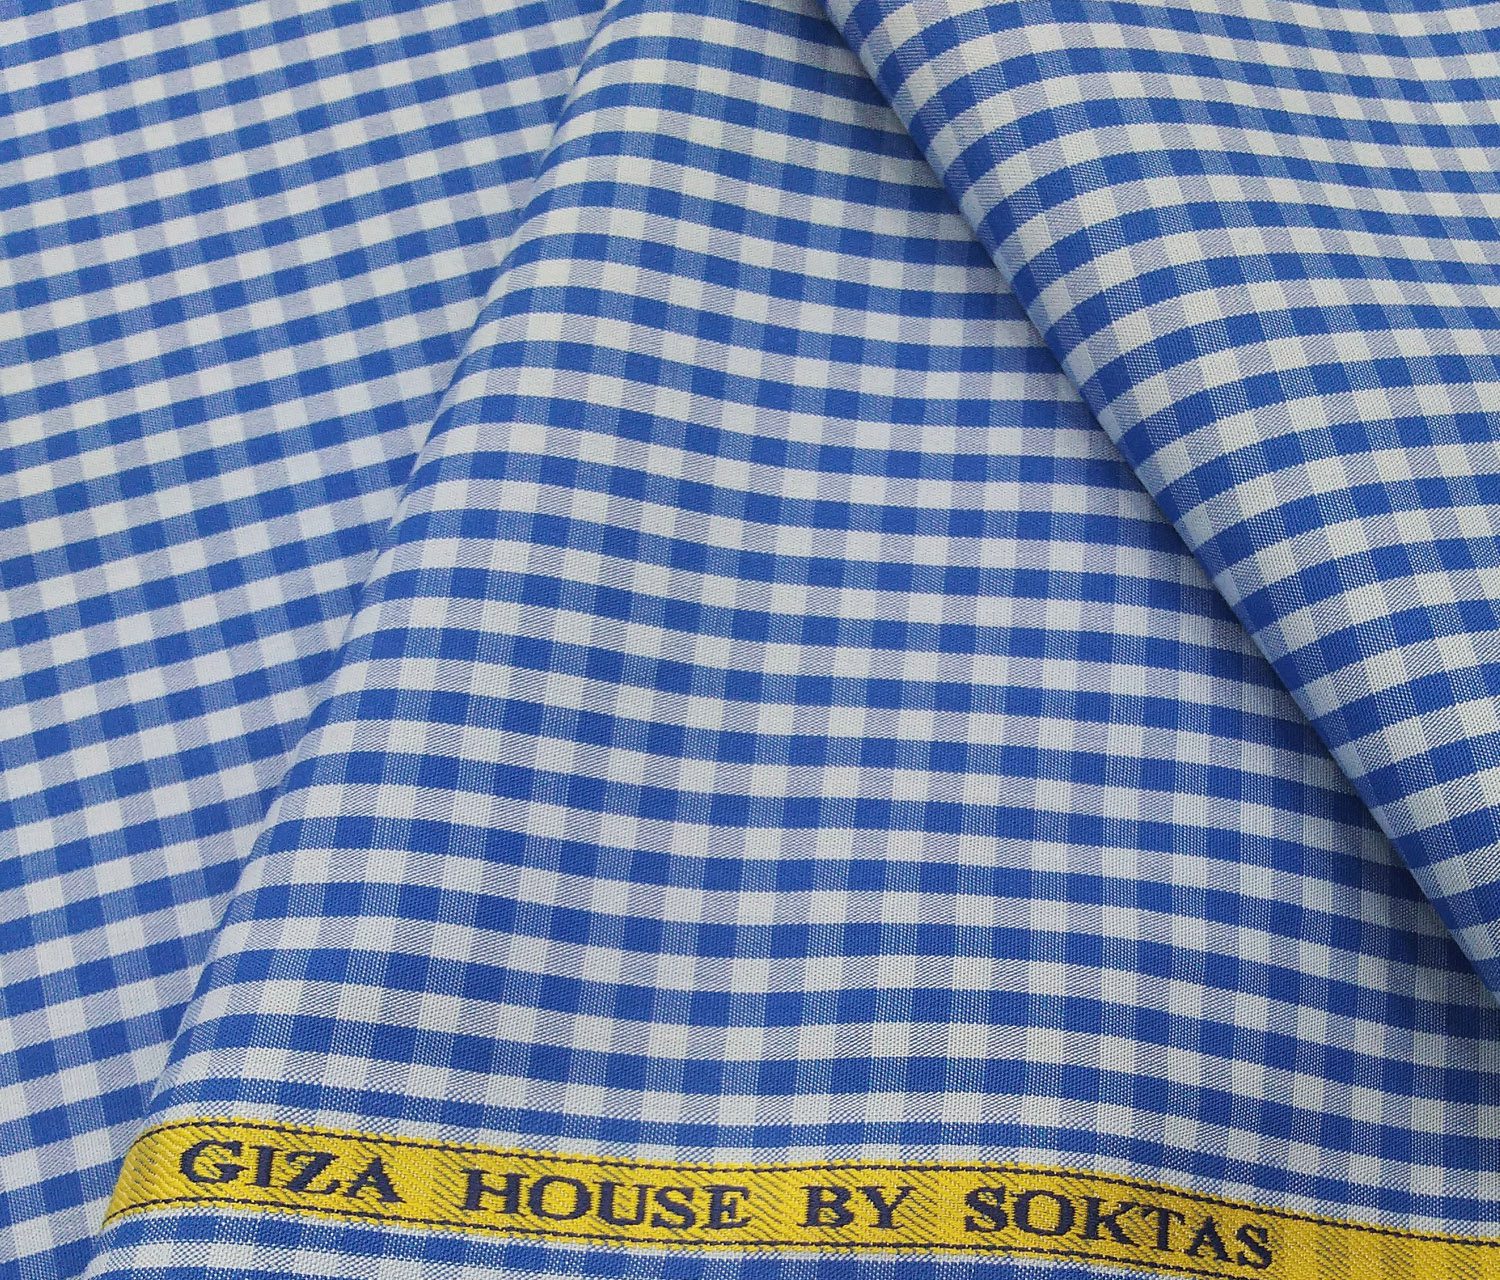 Soktas Men's Cotton Checks 1.60 Meter Unstitched Shirt Fabric (Light Sky Blue)